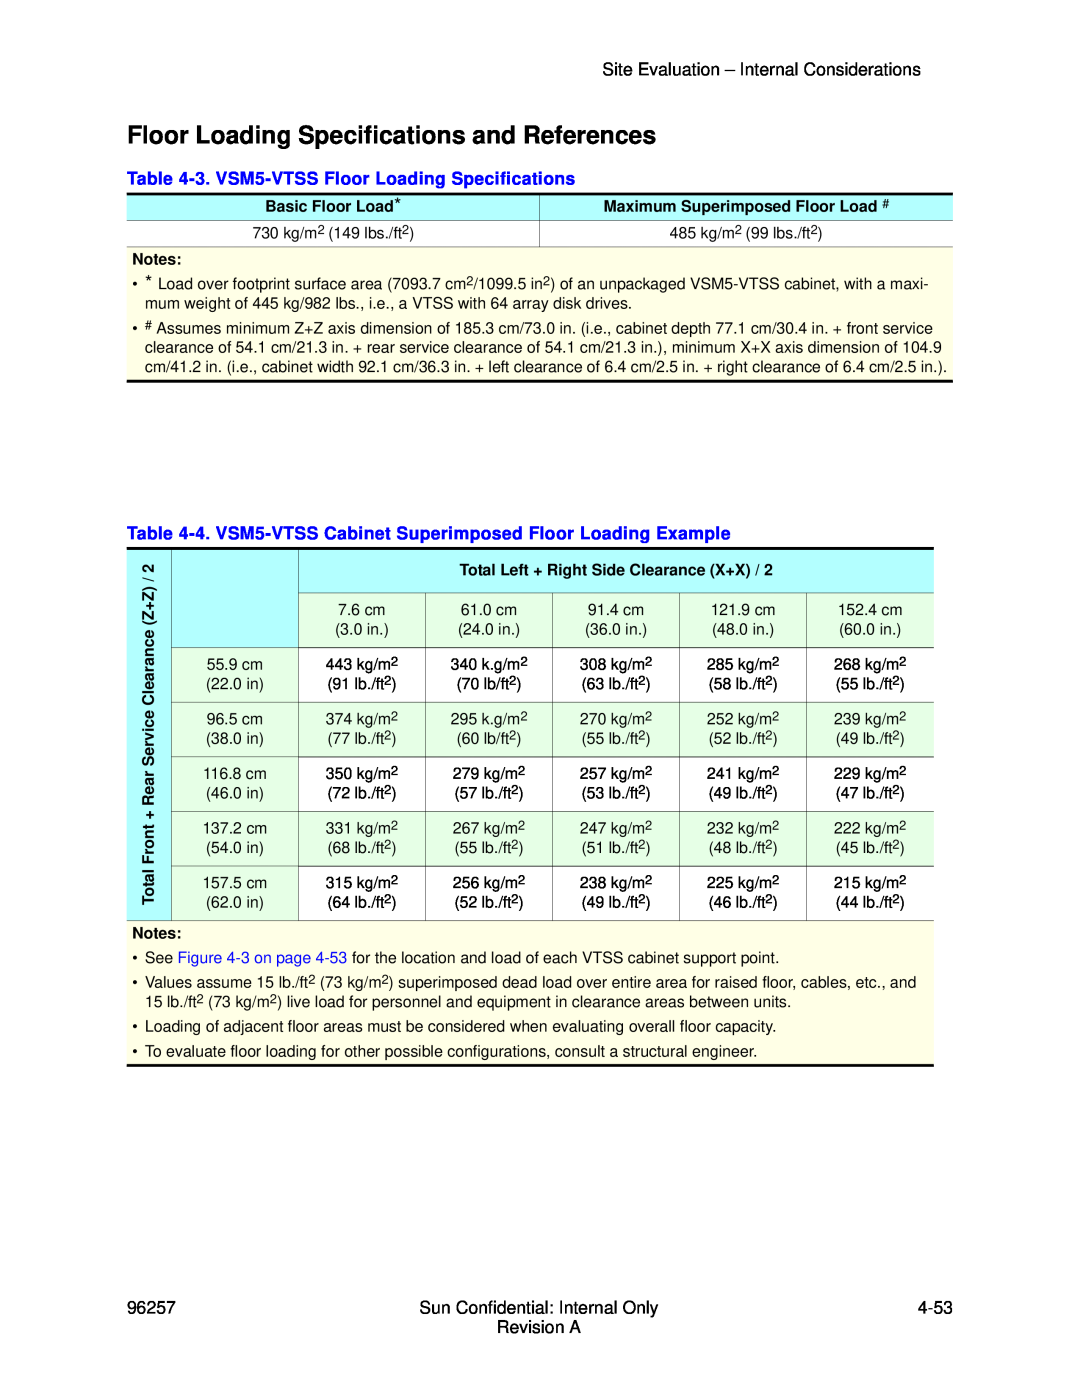 Sun Microsystems 96257 manual Site Evaluation - Internal Considerations, 3. VSM5-VTSS Floor Loading Specifications 